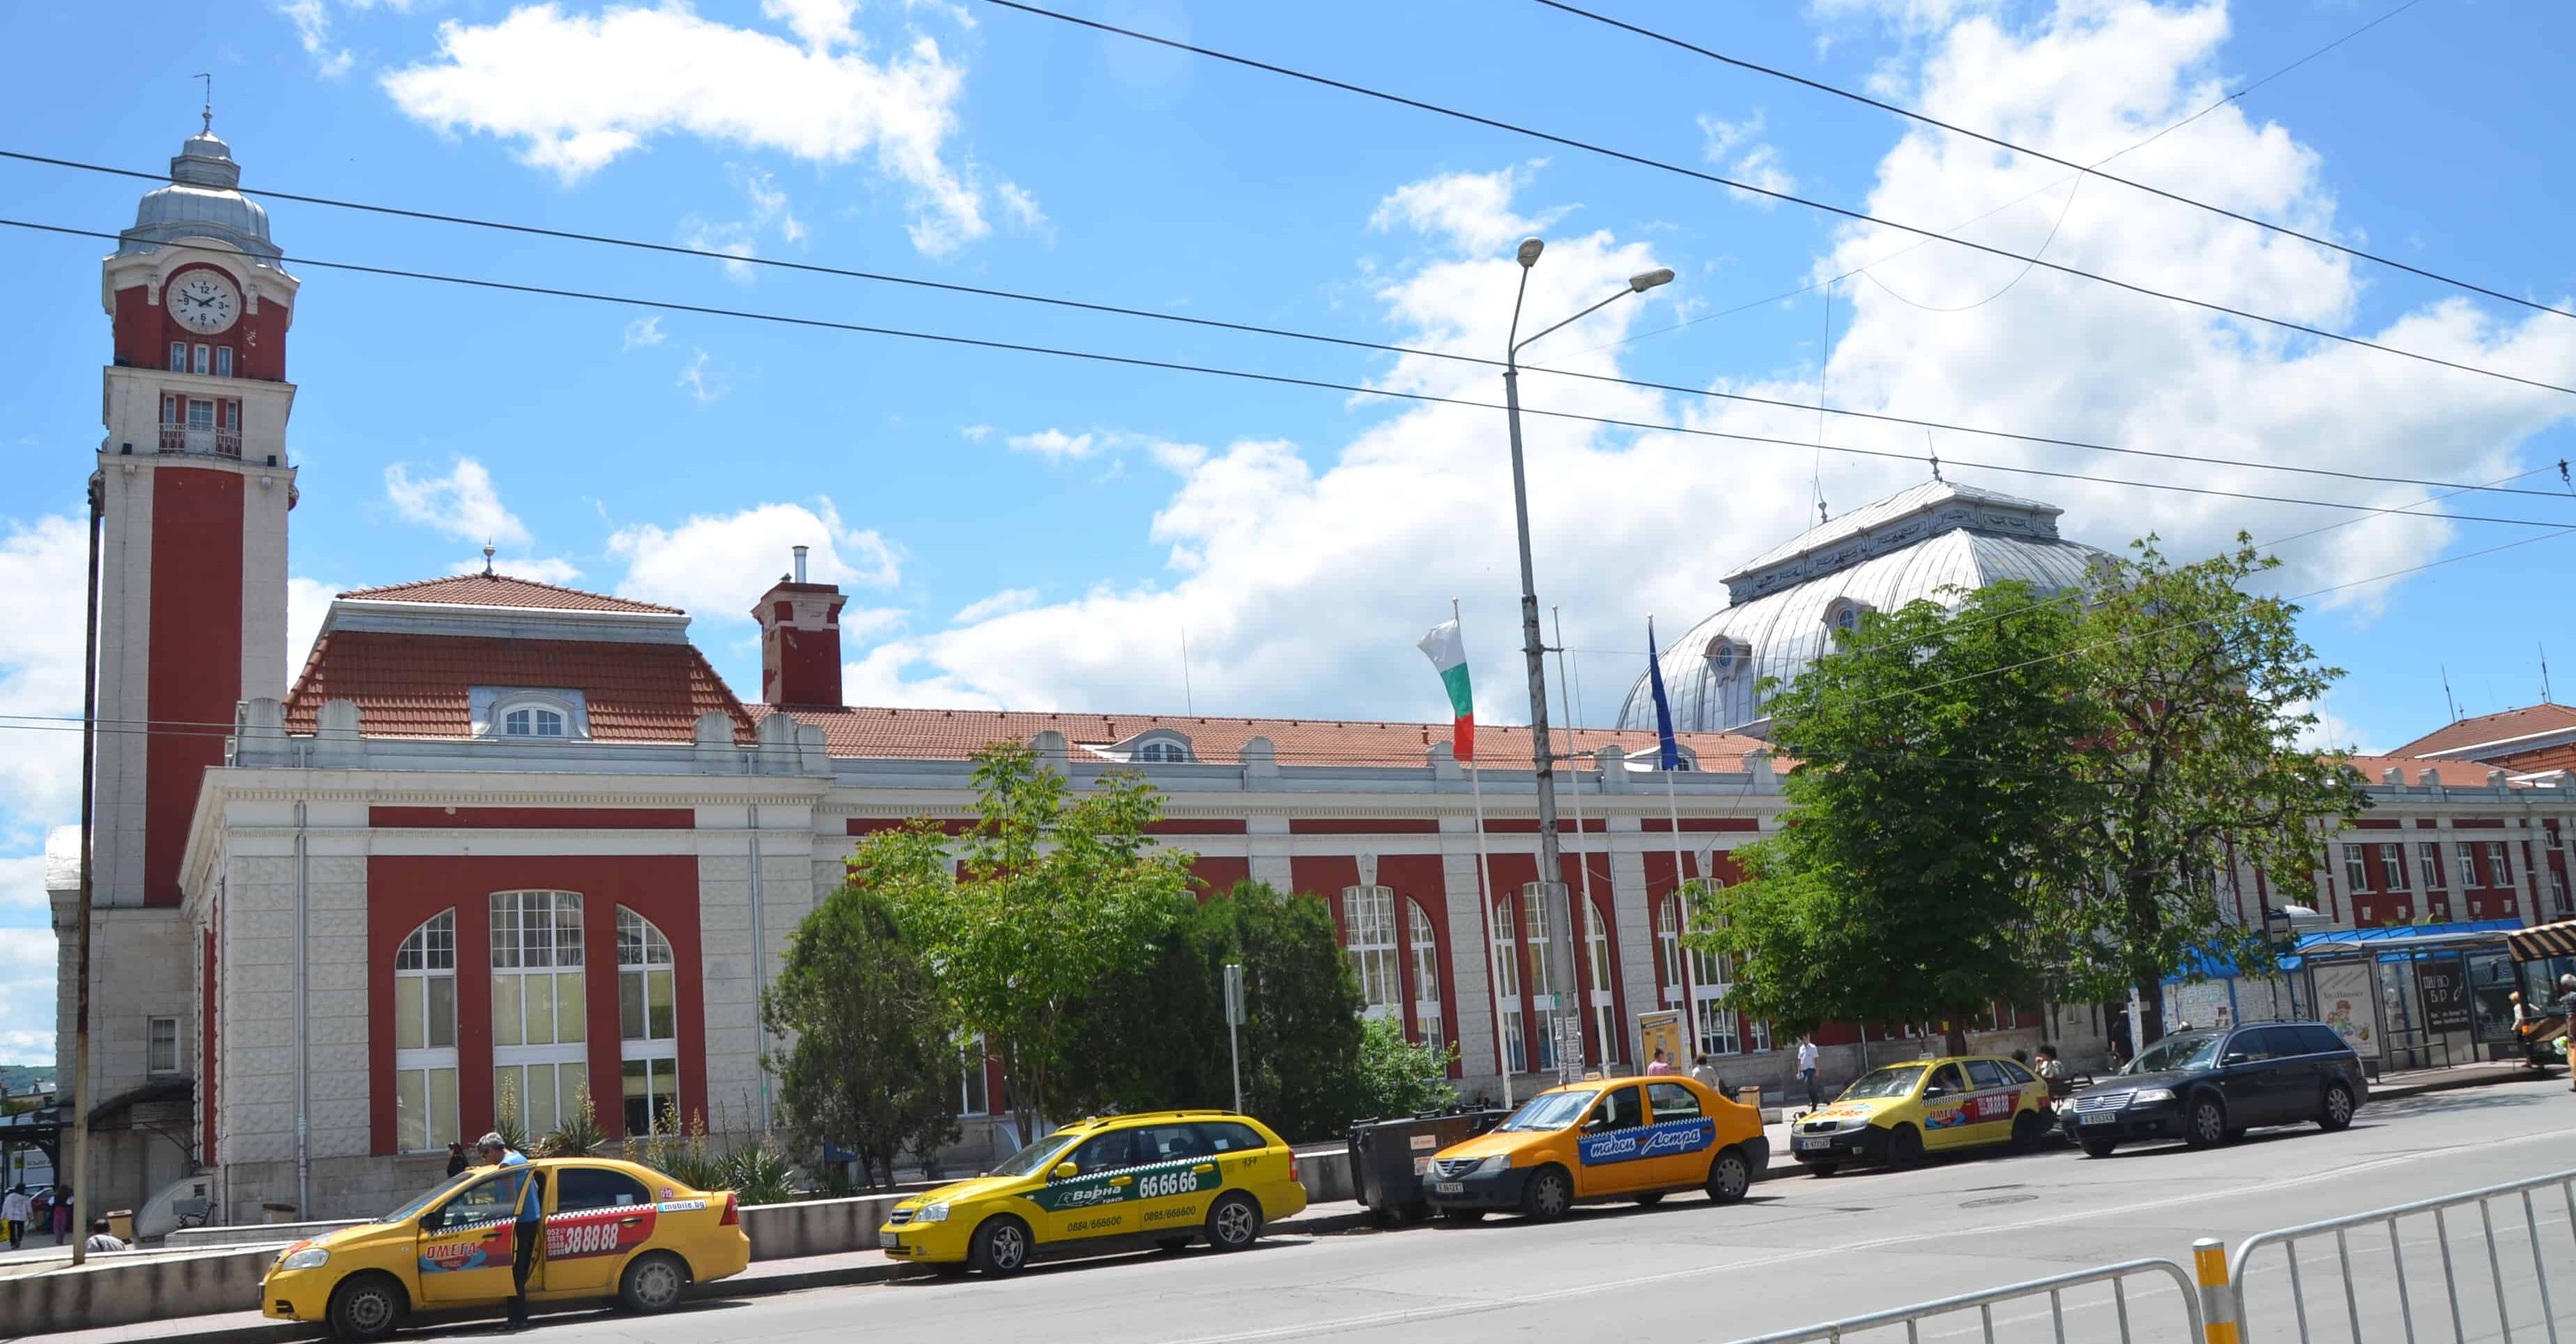 Varna Railway Station in Bulgaria